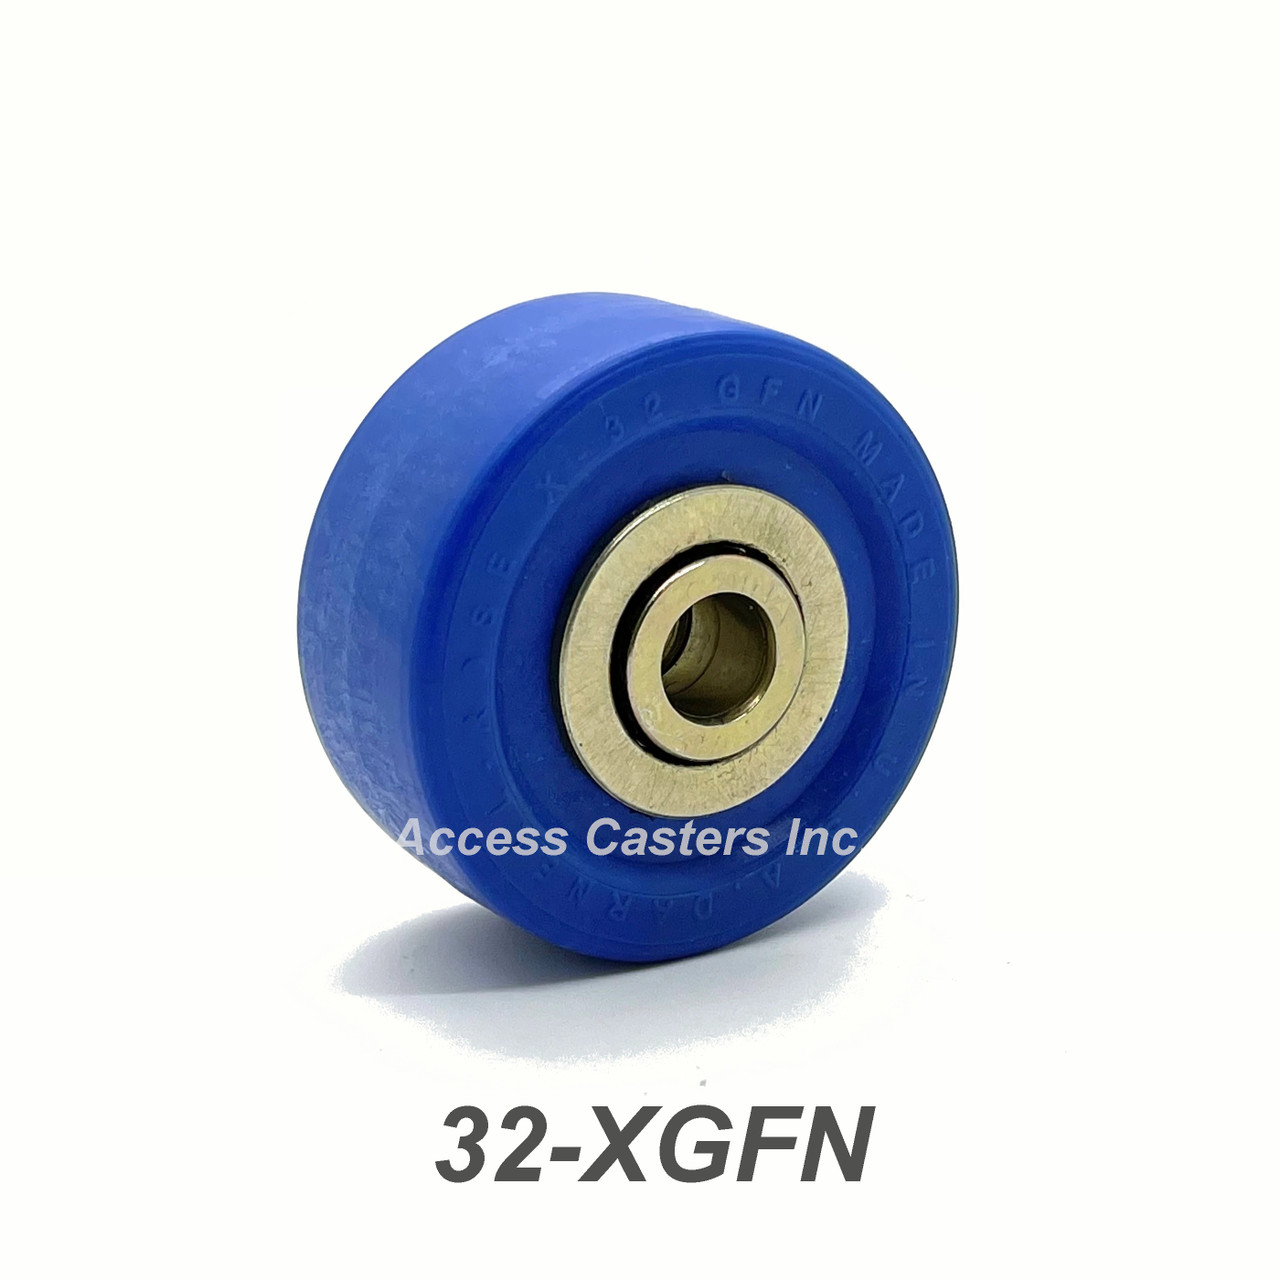 32-XFGN 2" high capacity wheel